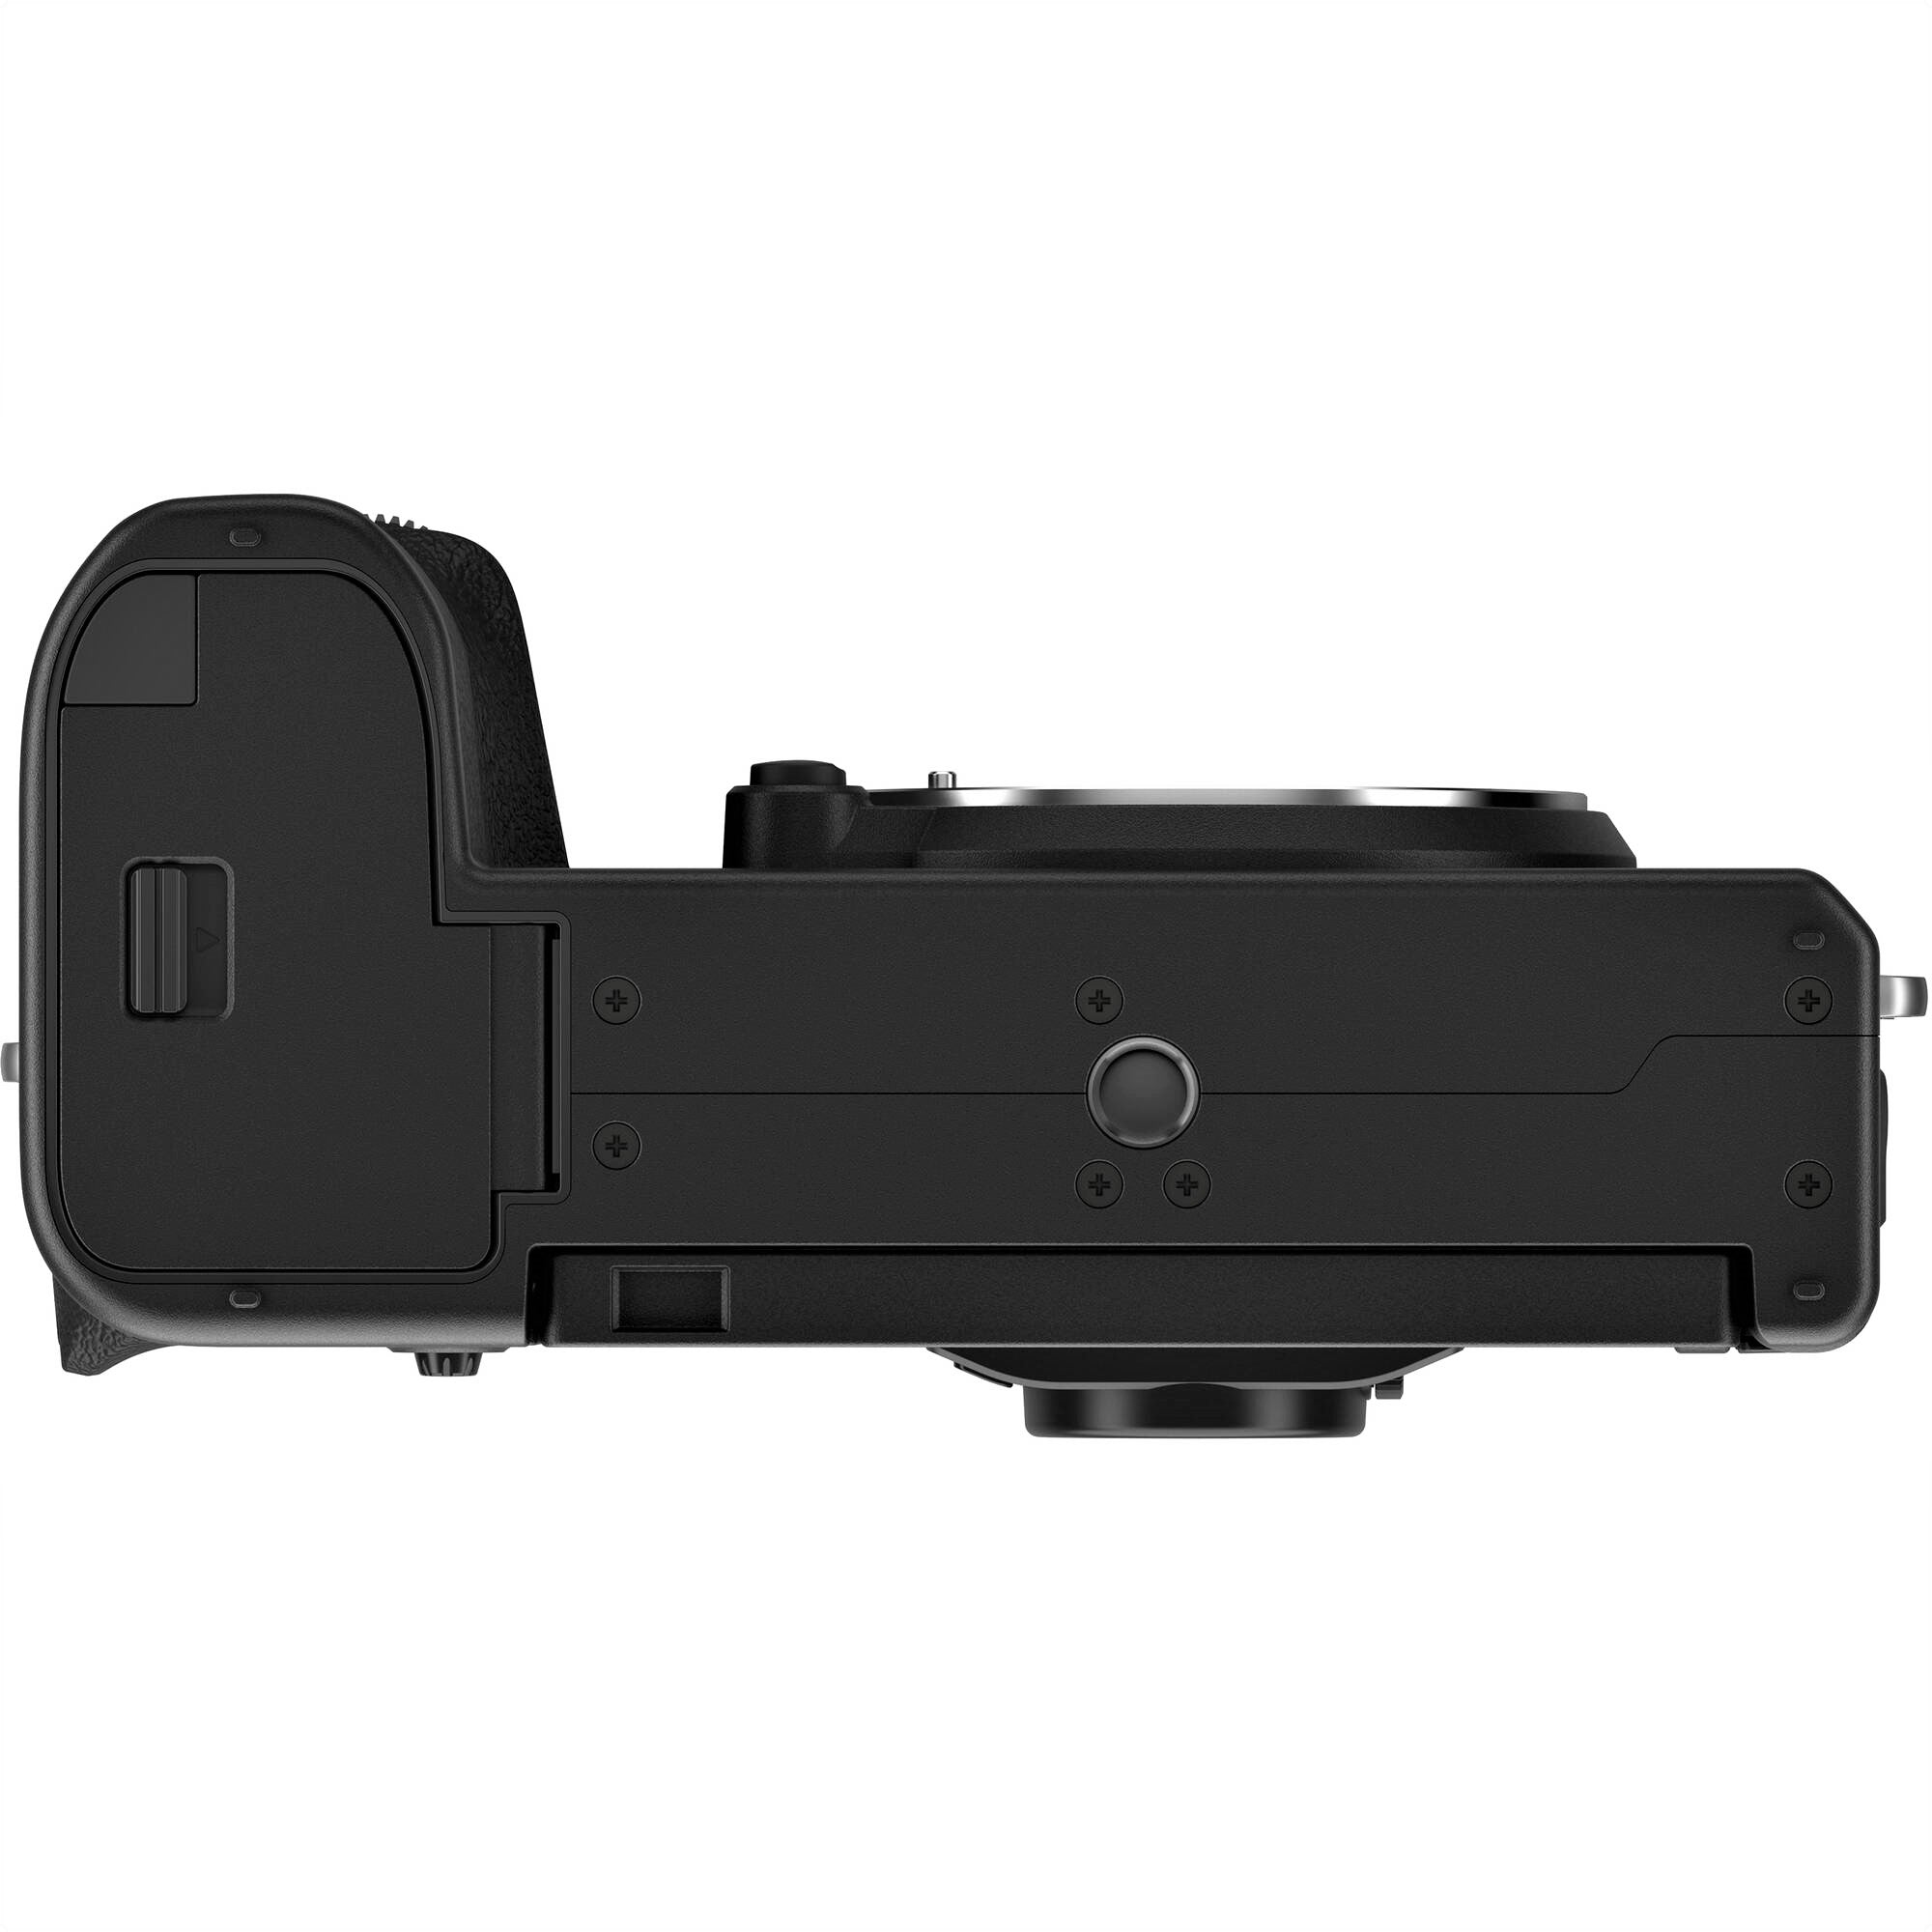 FUJIFILM X-S20 Mirrorless Camera with 18-55mm Lens (Black) - Bottom View